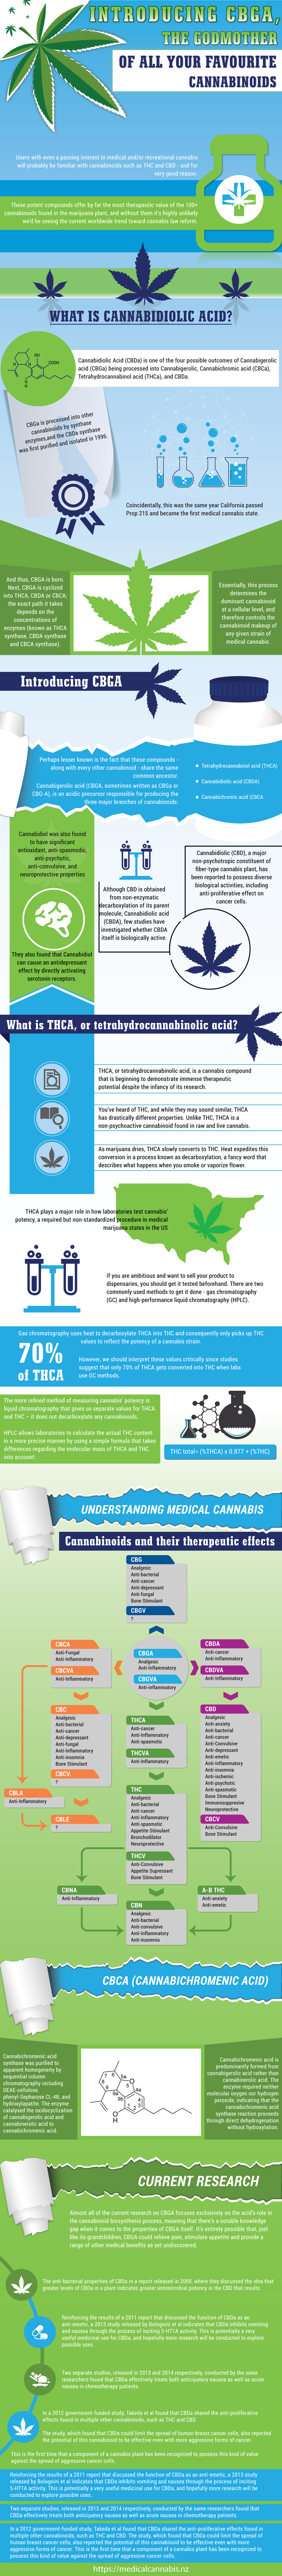 cannabinoid infographic for medical marijuana